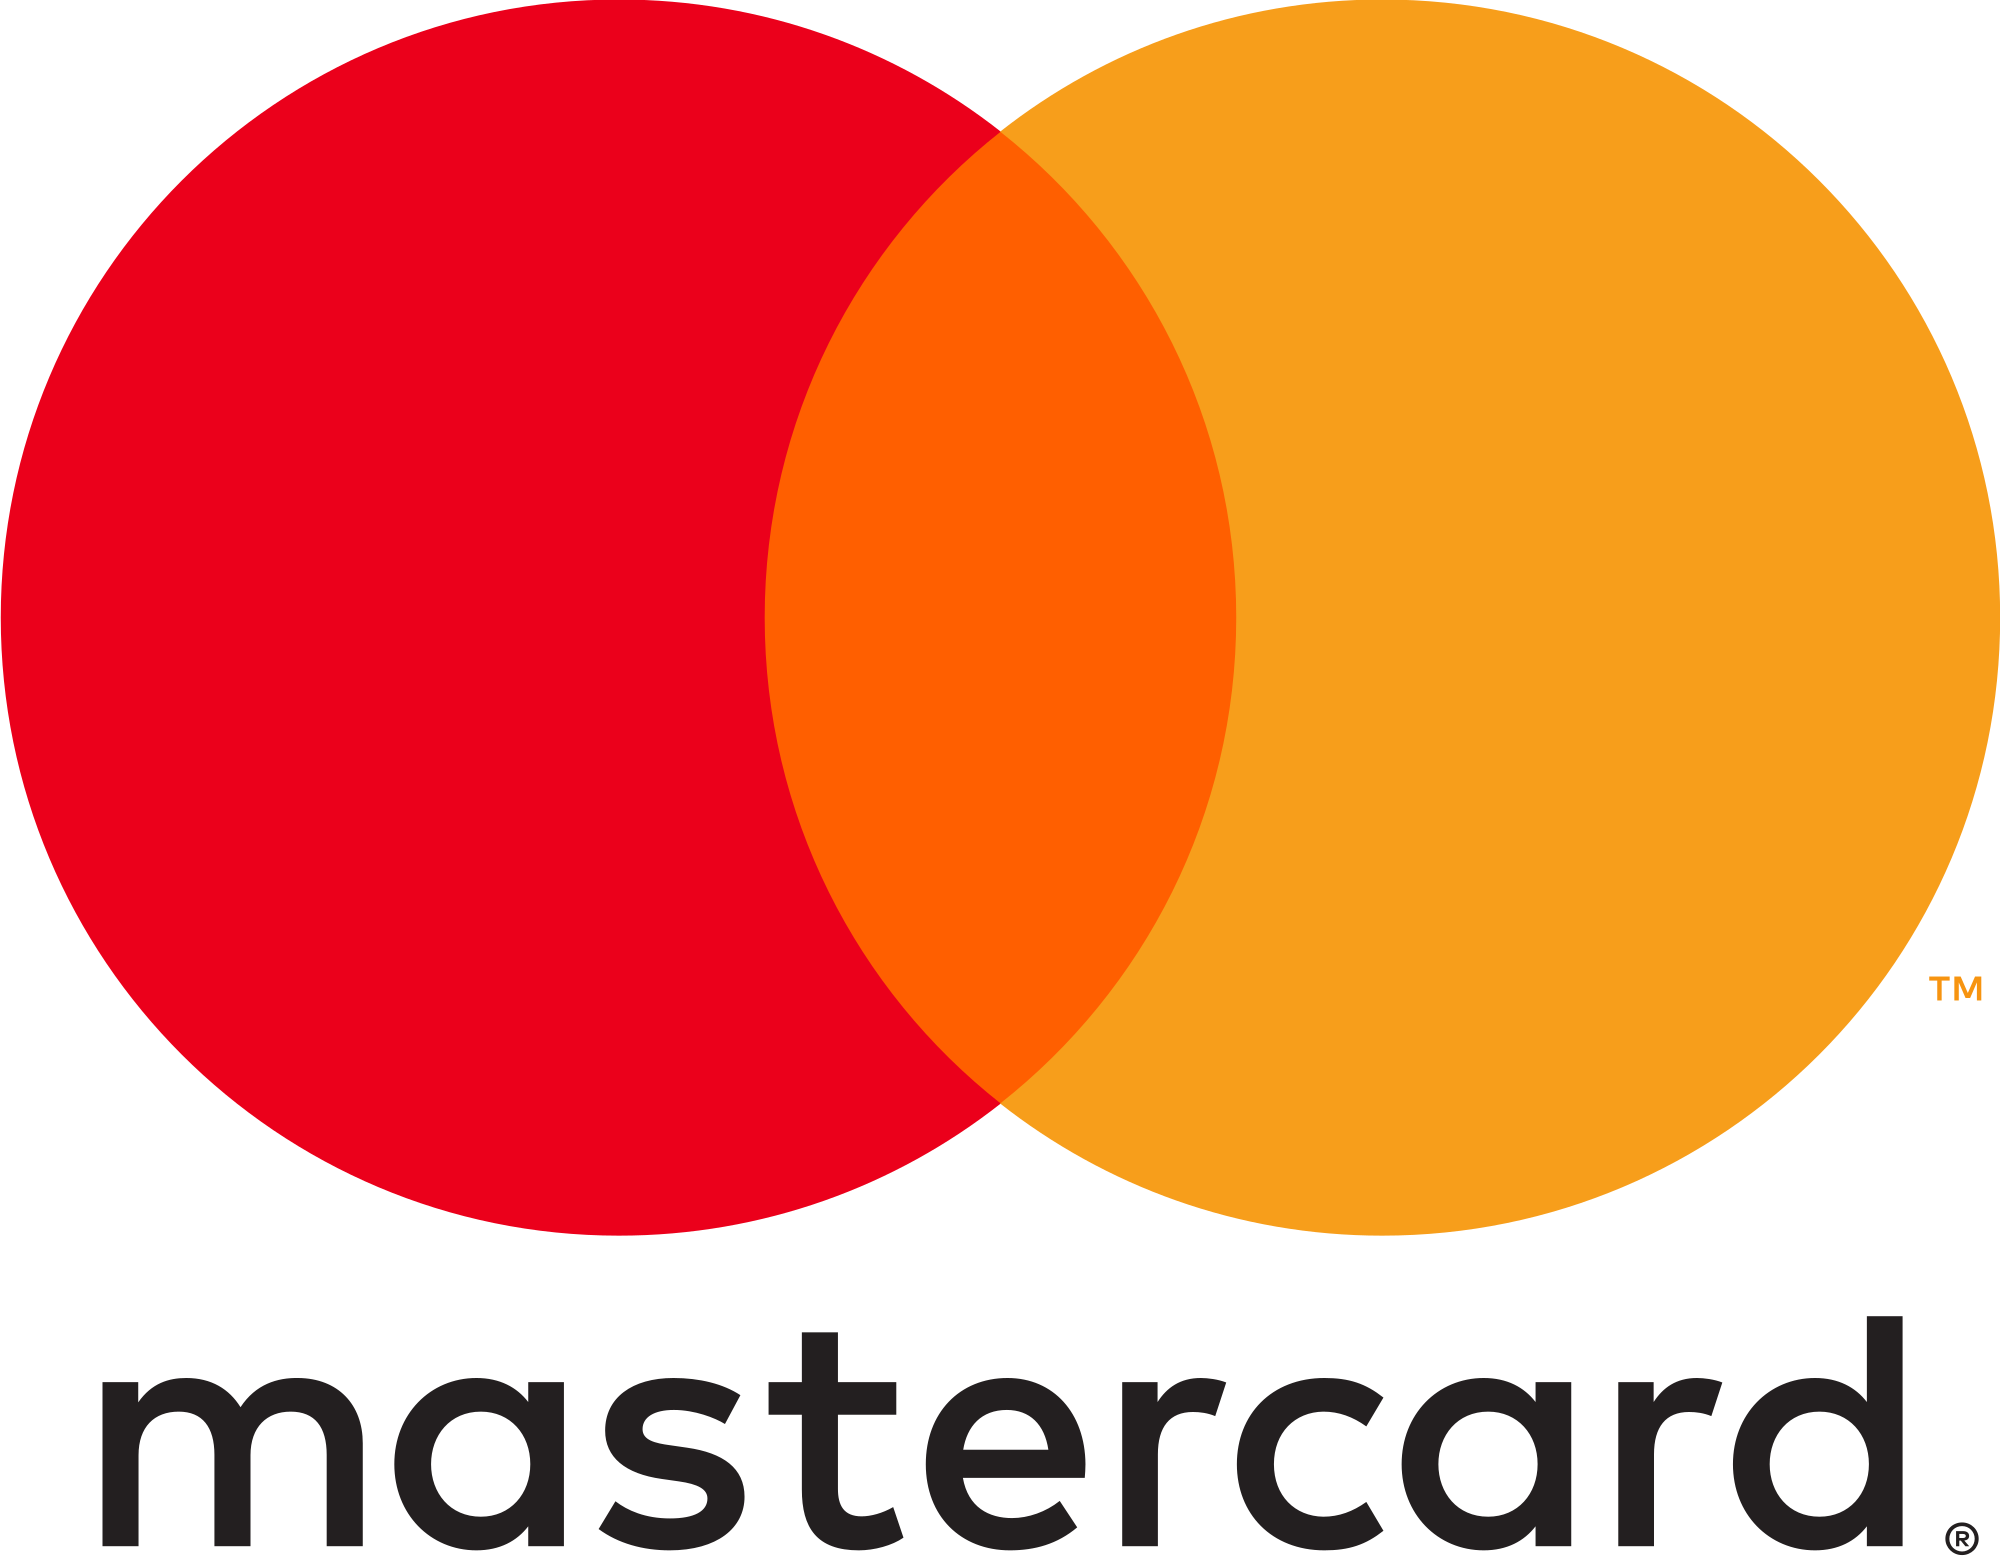 Mastercard logo PNG - Masterc